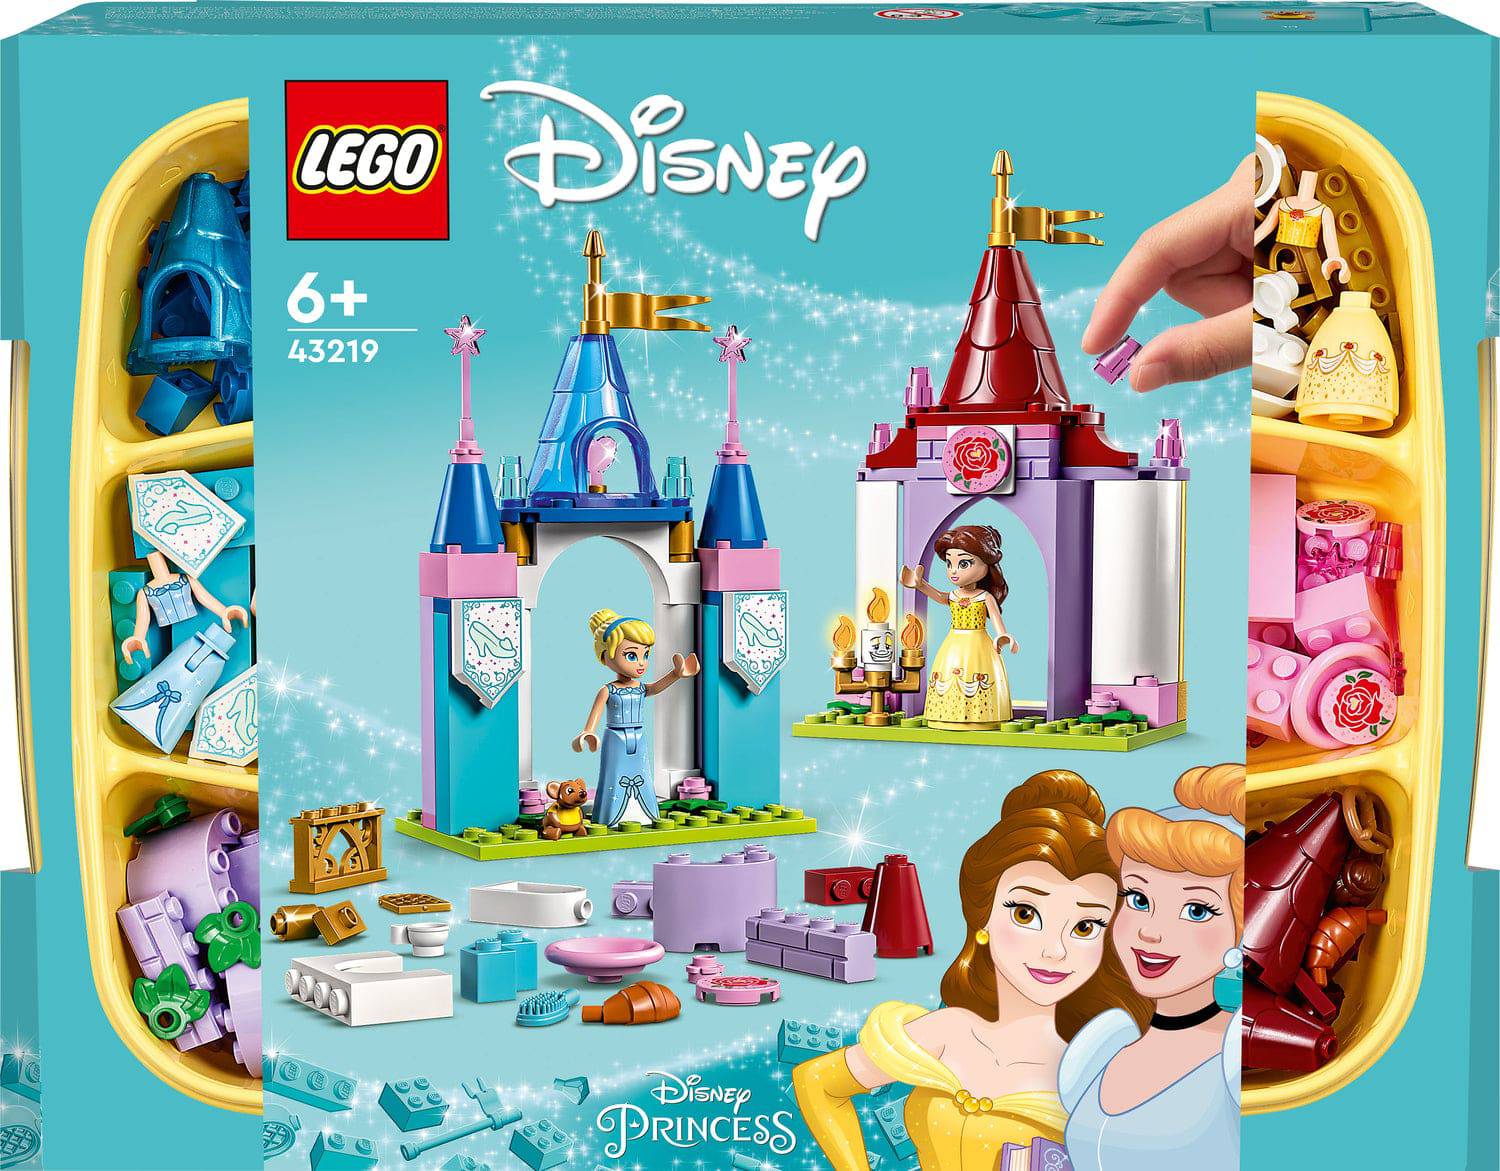 43219 Disney Princess Creative - A Child's Delight